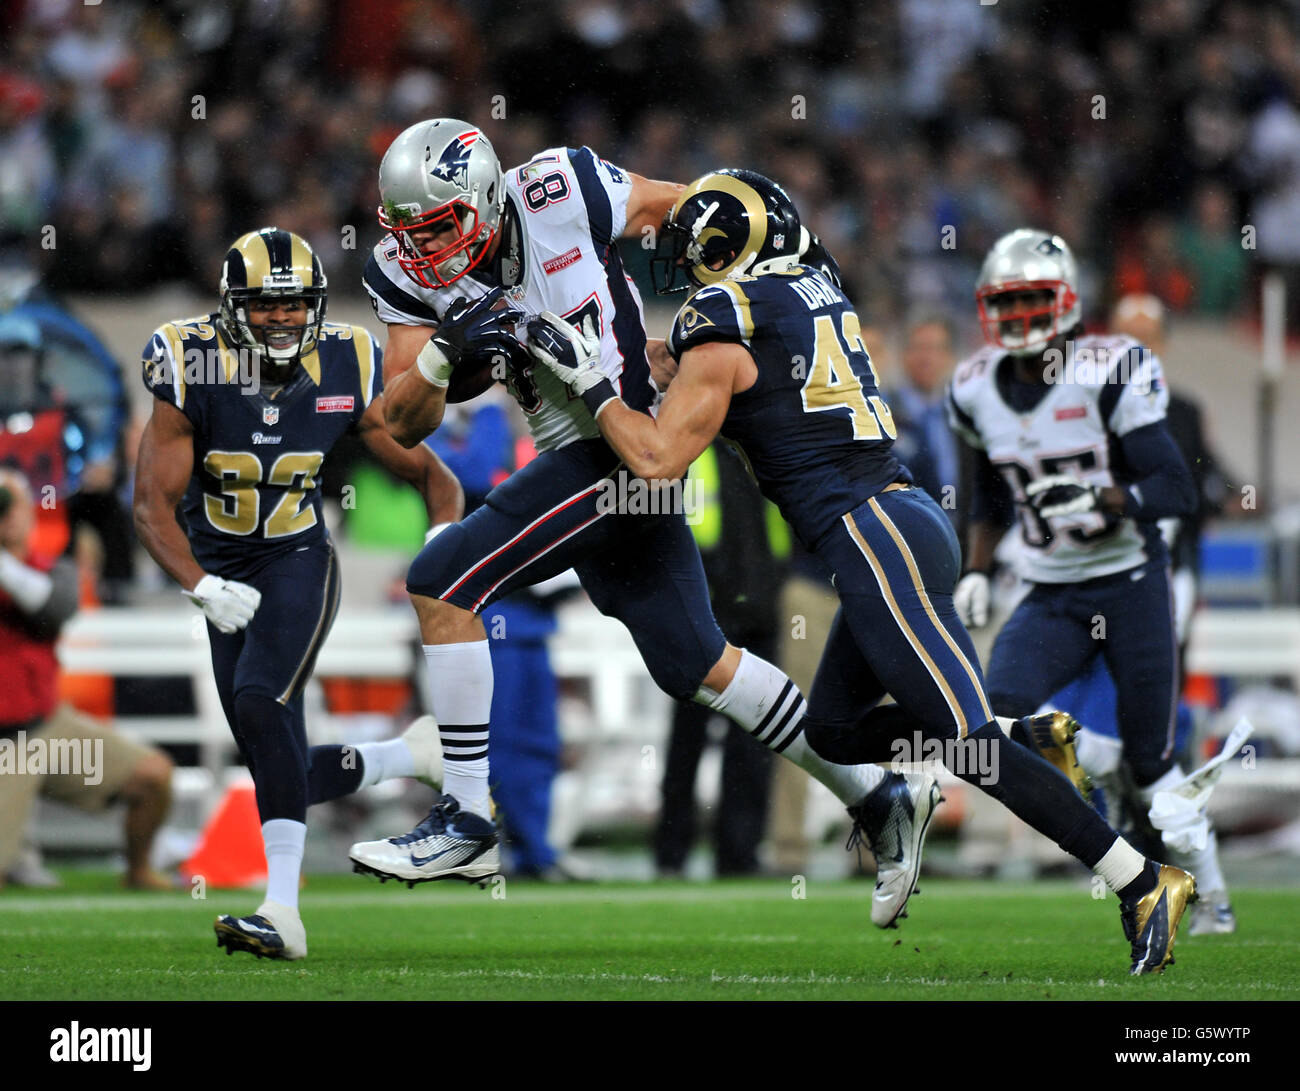 Rob Gronkowski Photo Super Bowl LV Champion Touchdown Catch 11x14 - New  England Picture